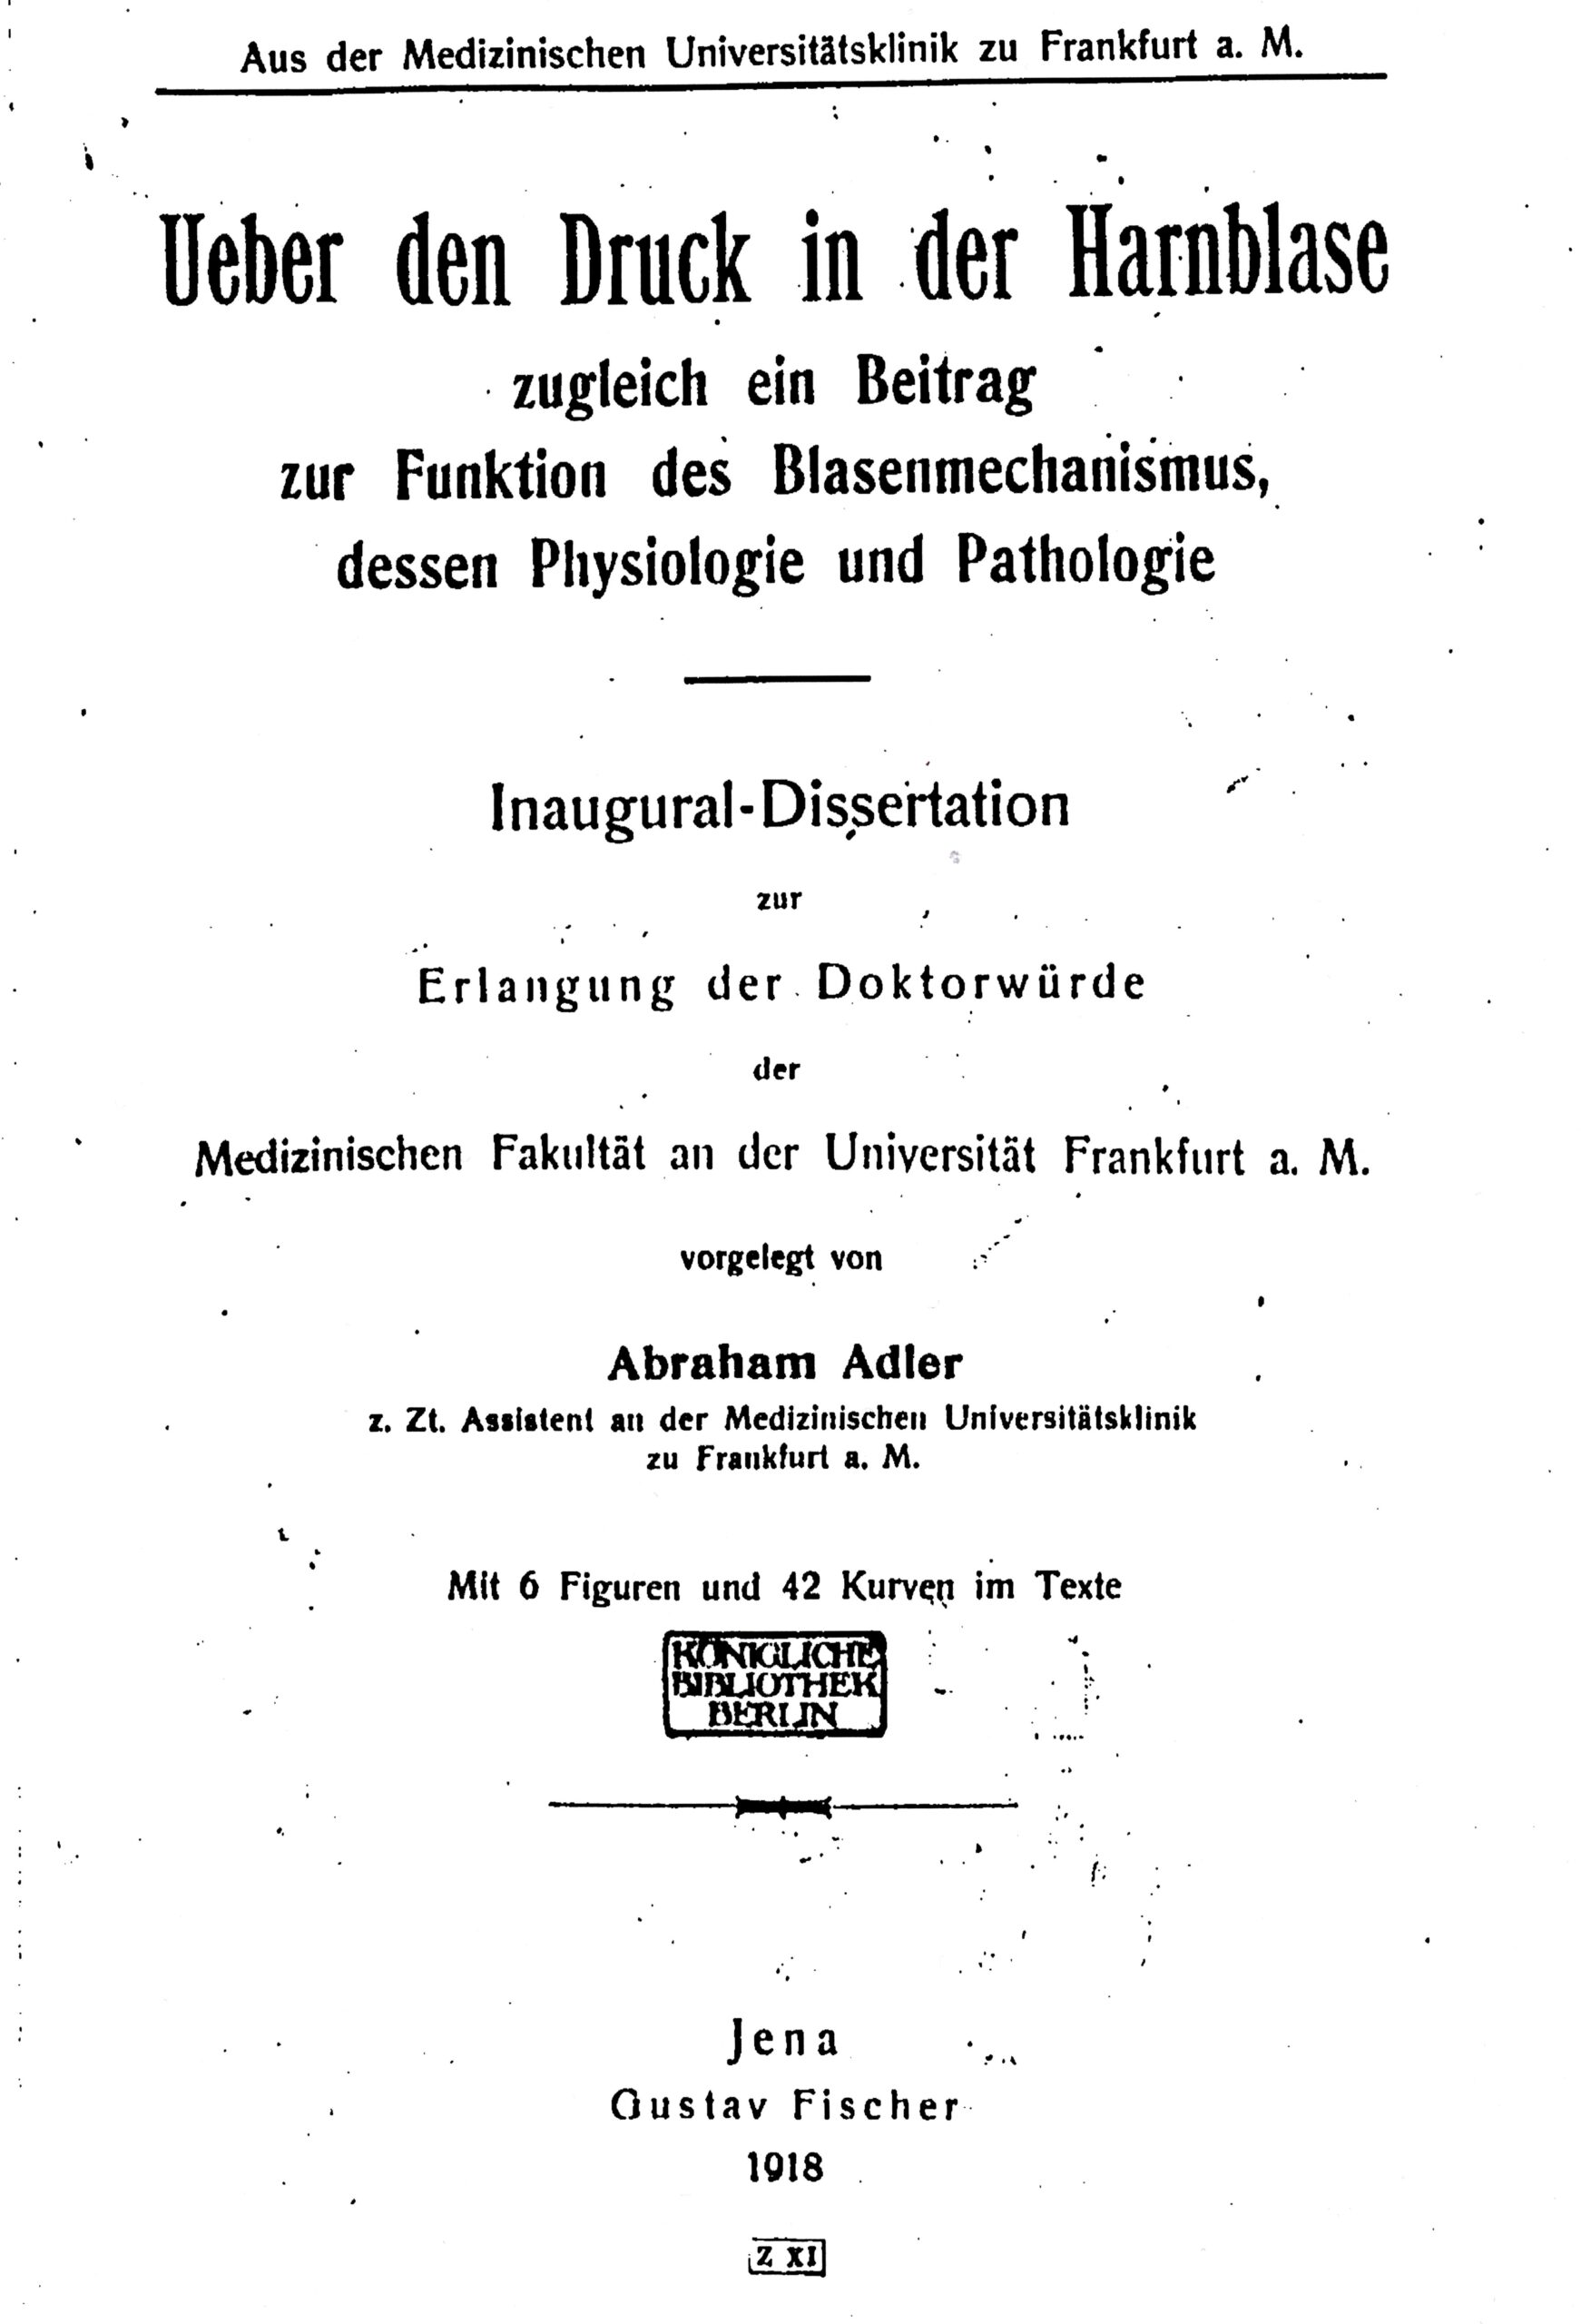 Dissertation, Frankfurt 1918